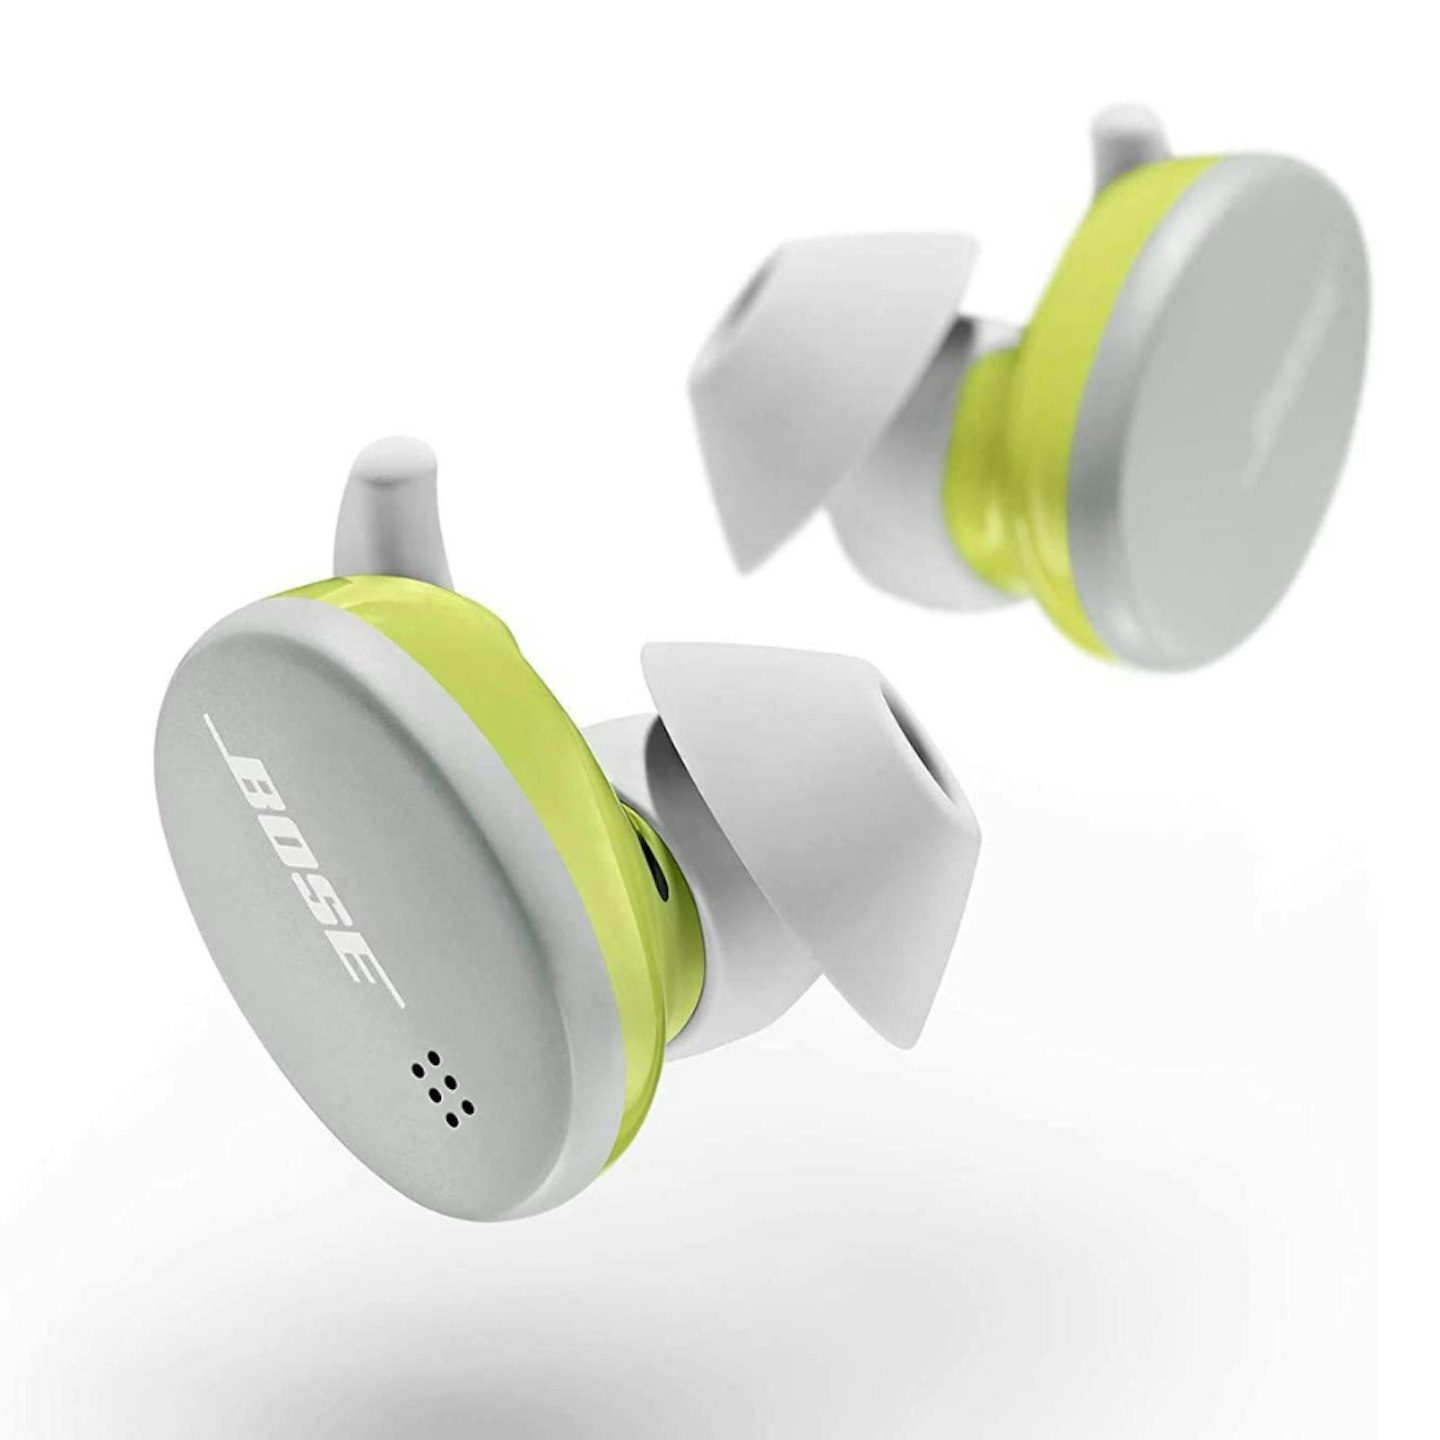 Bose Sport Earbuds - In-ear earbud headphones